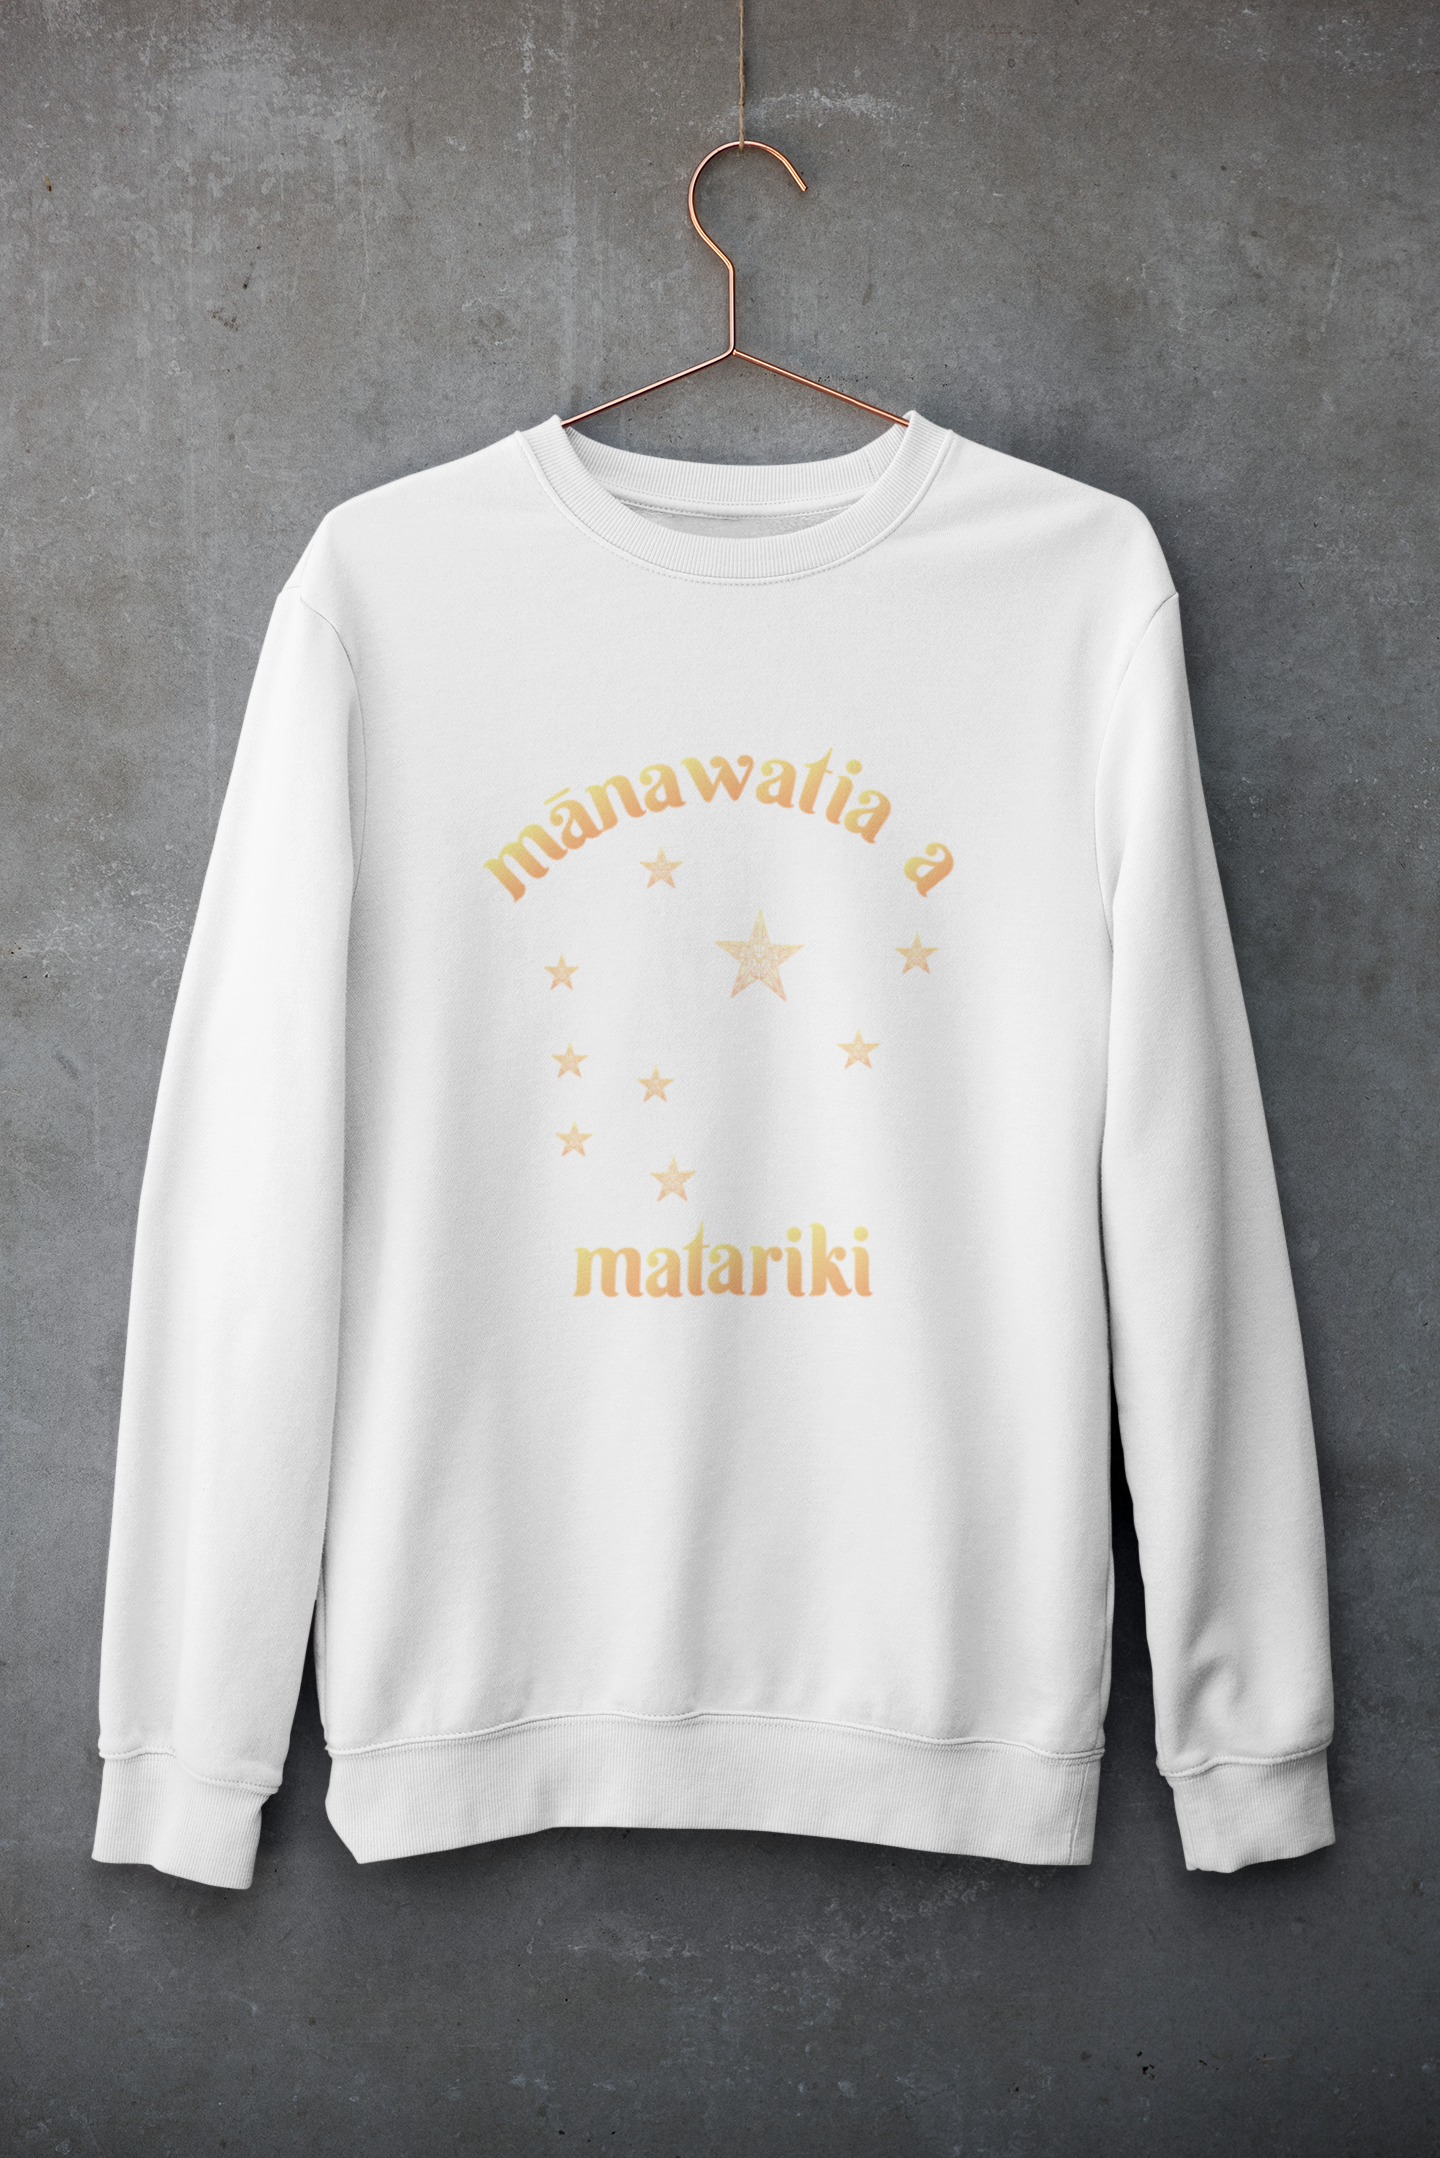 mānawatia a matariki (classic) - Sweatshirt